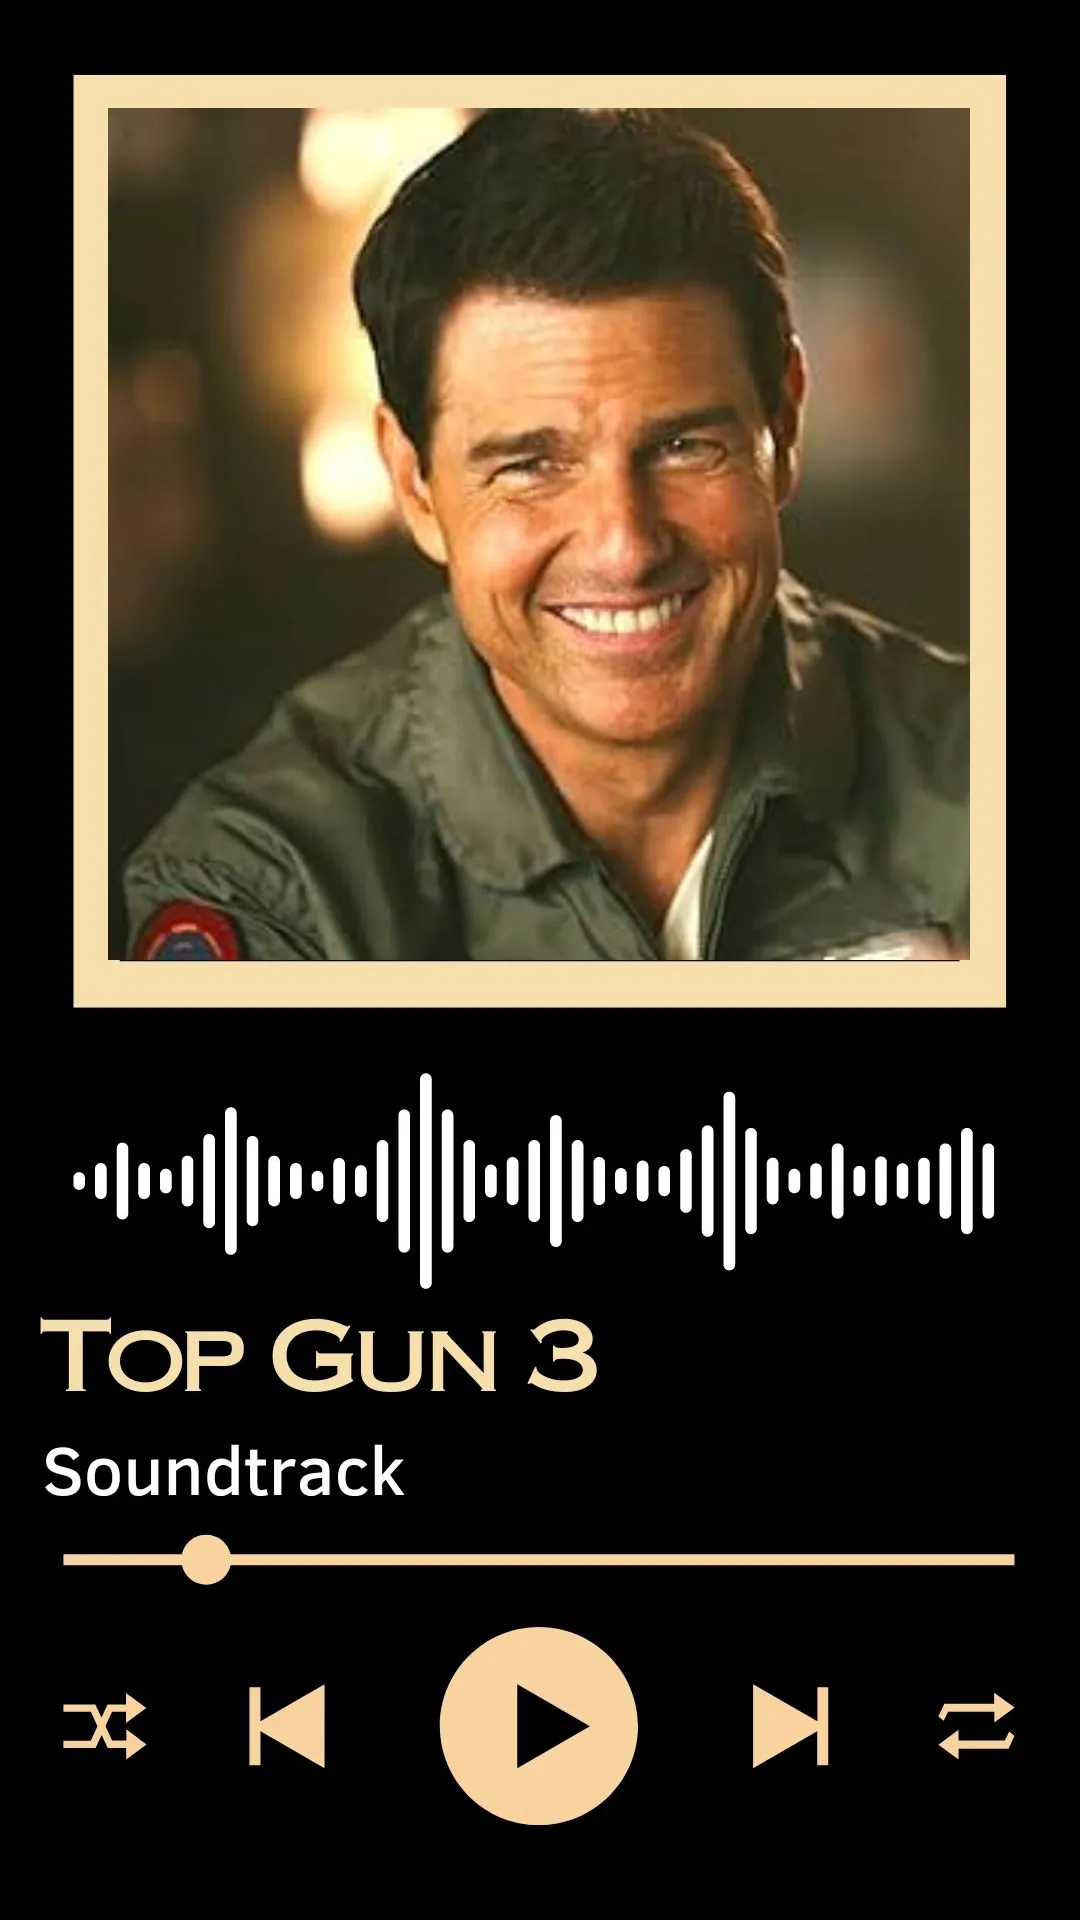 Top Gun 3 Soundtrack